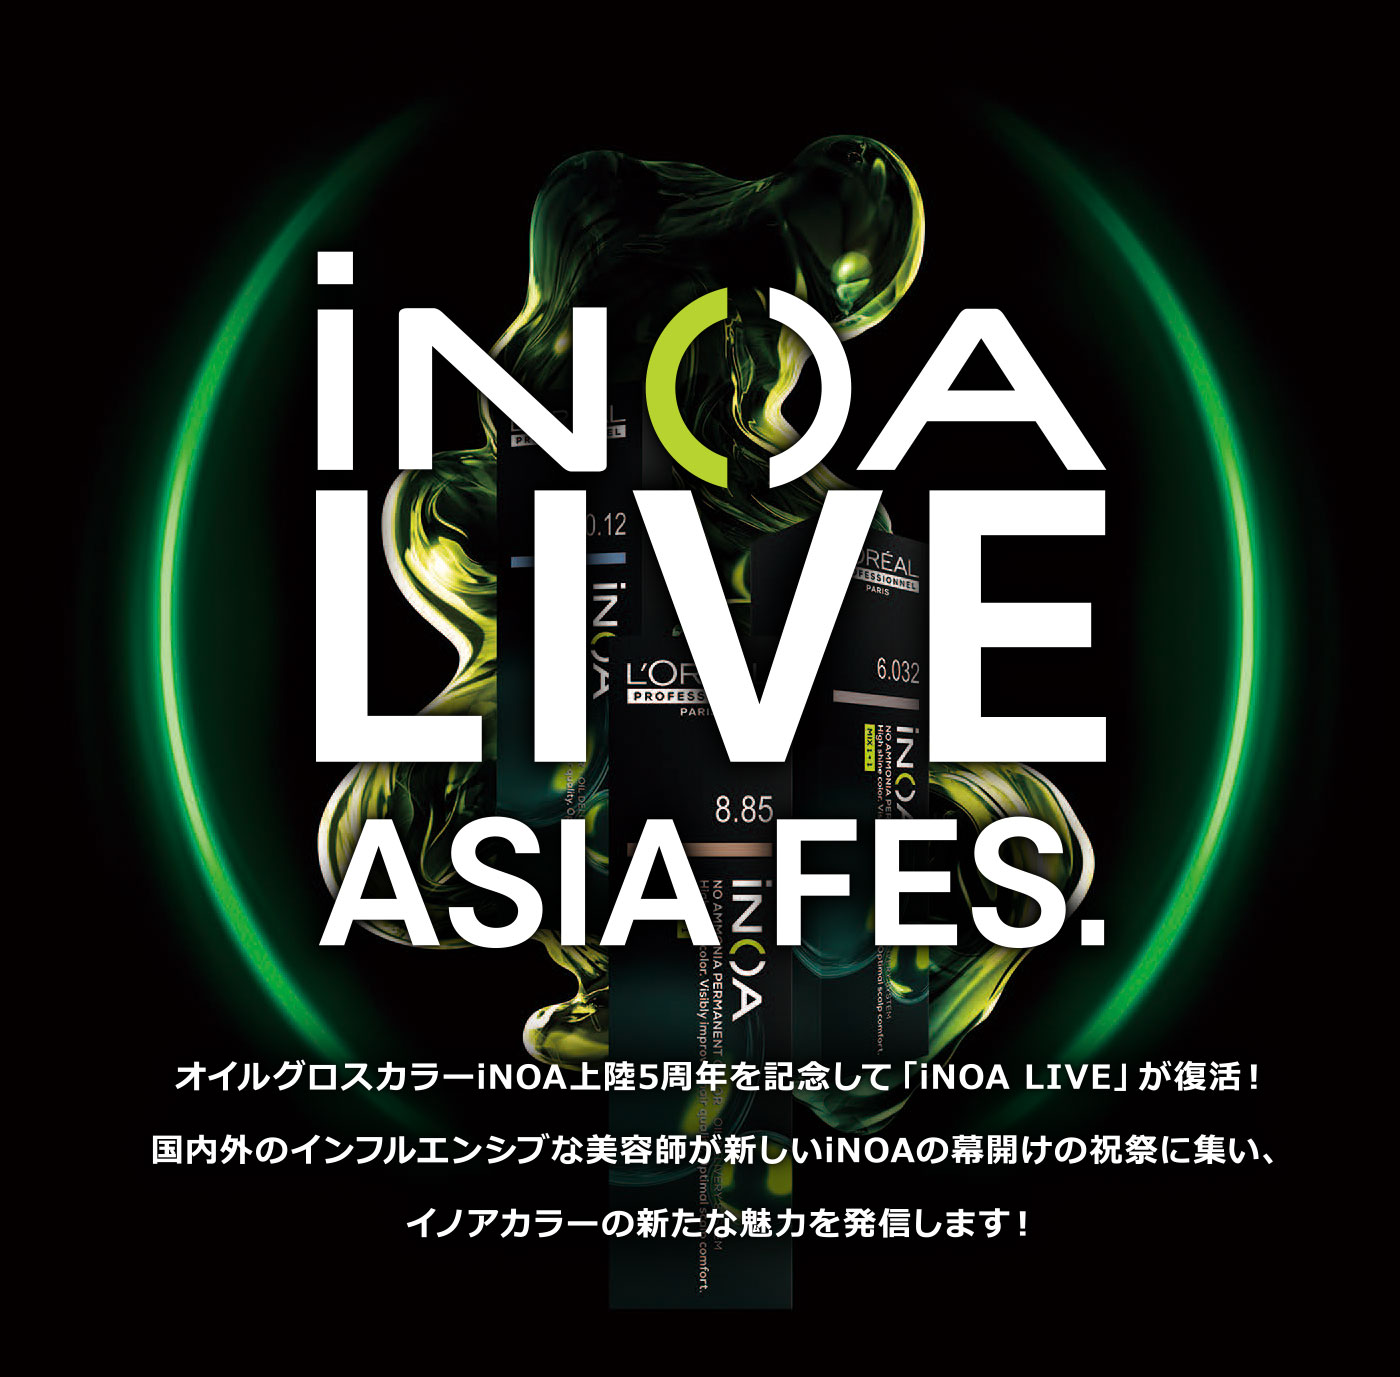 iNOA LIVE ASIA FES. オイルグロスカラーiNOA上陸5周年を記念して「iNOA LIVE」が復活！国内外のインフルエンシブな美容師が新しいiNOAの幕開けの祝祭に集い、イノアカラーの新たな魅⼒を発信します！